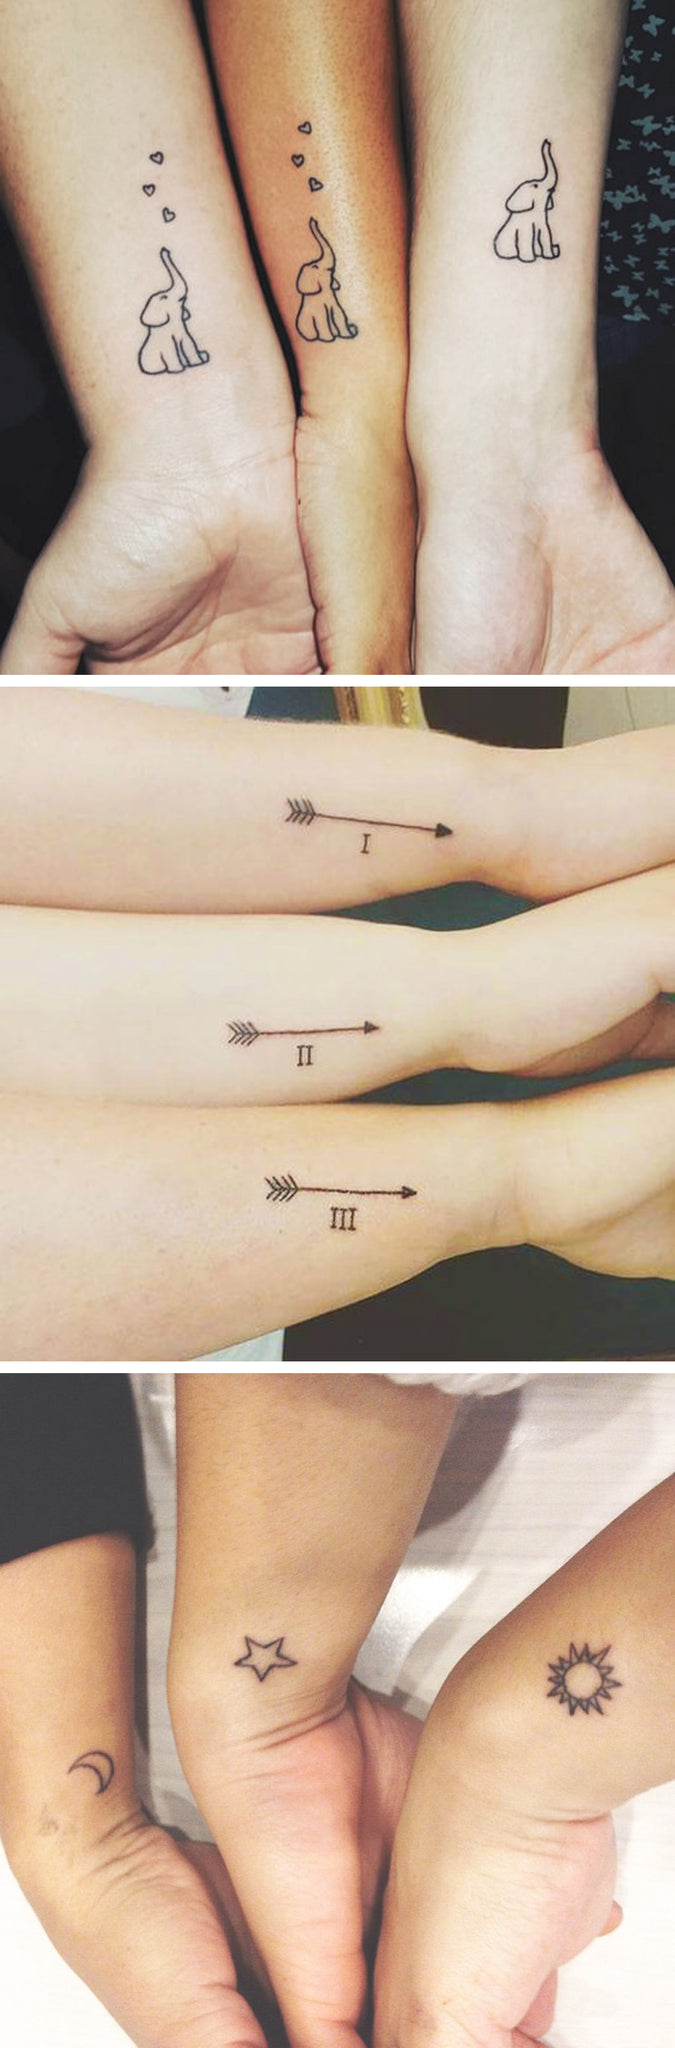 Minimalistic Matching Tattoo Ideas for 3 Sisters, Bestfriends, Siblings - Small Wrist Ideas Para Perforar Orejas Elephant Arrow Roman Numerals Sun and Moon - www.MyBodiArt.com